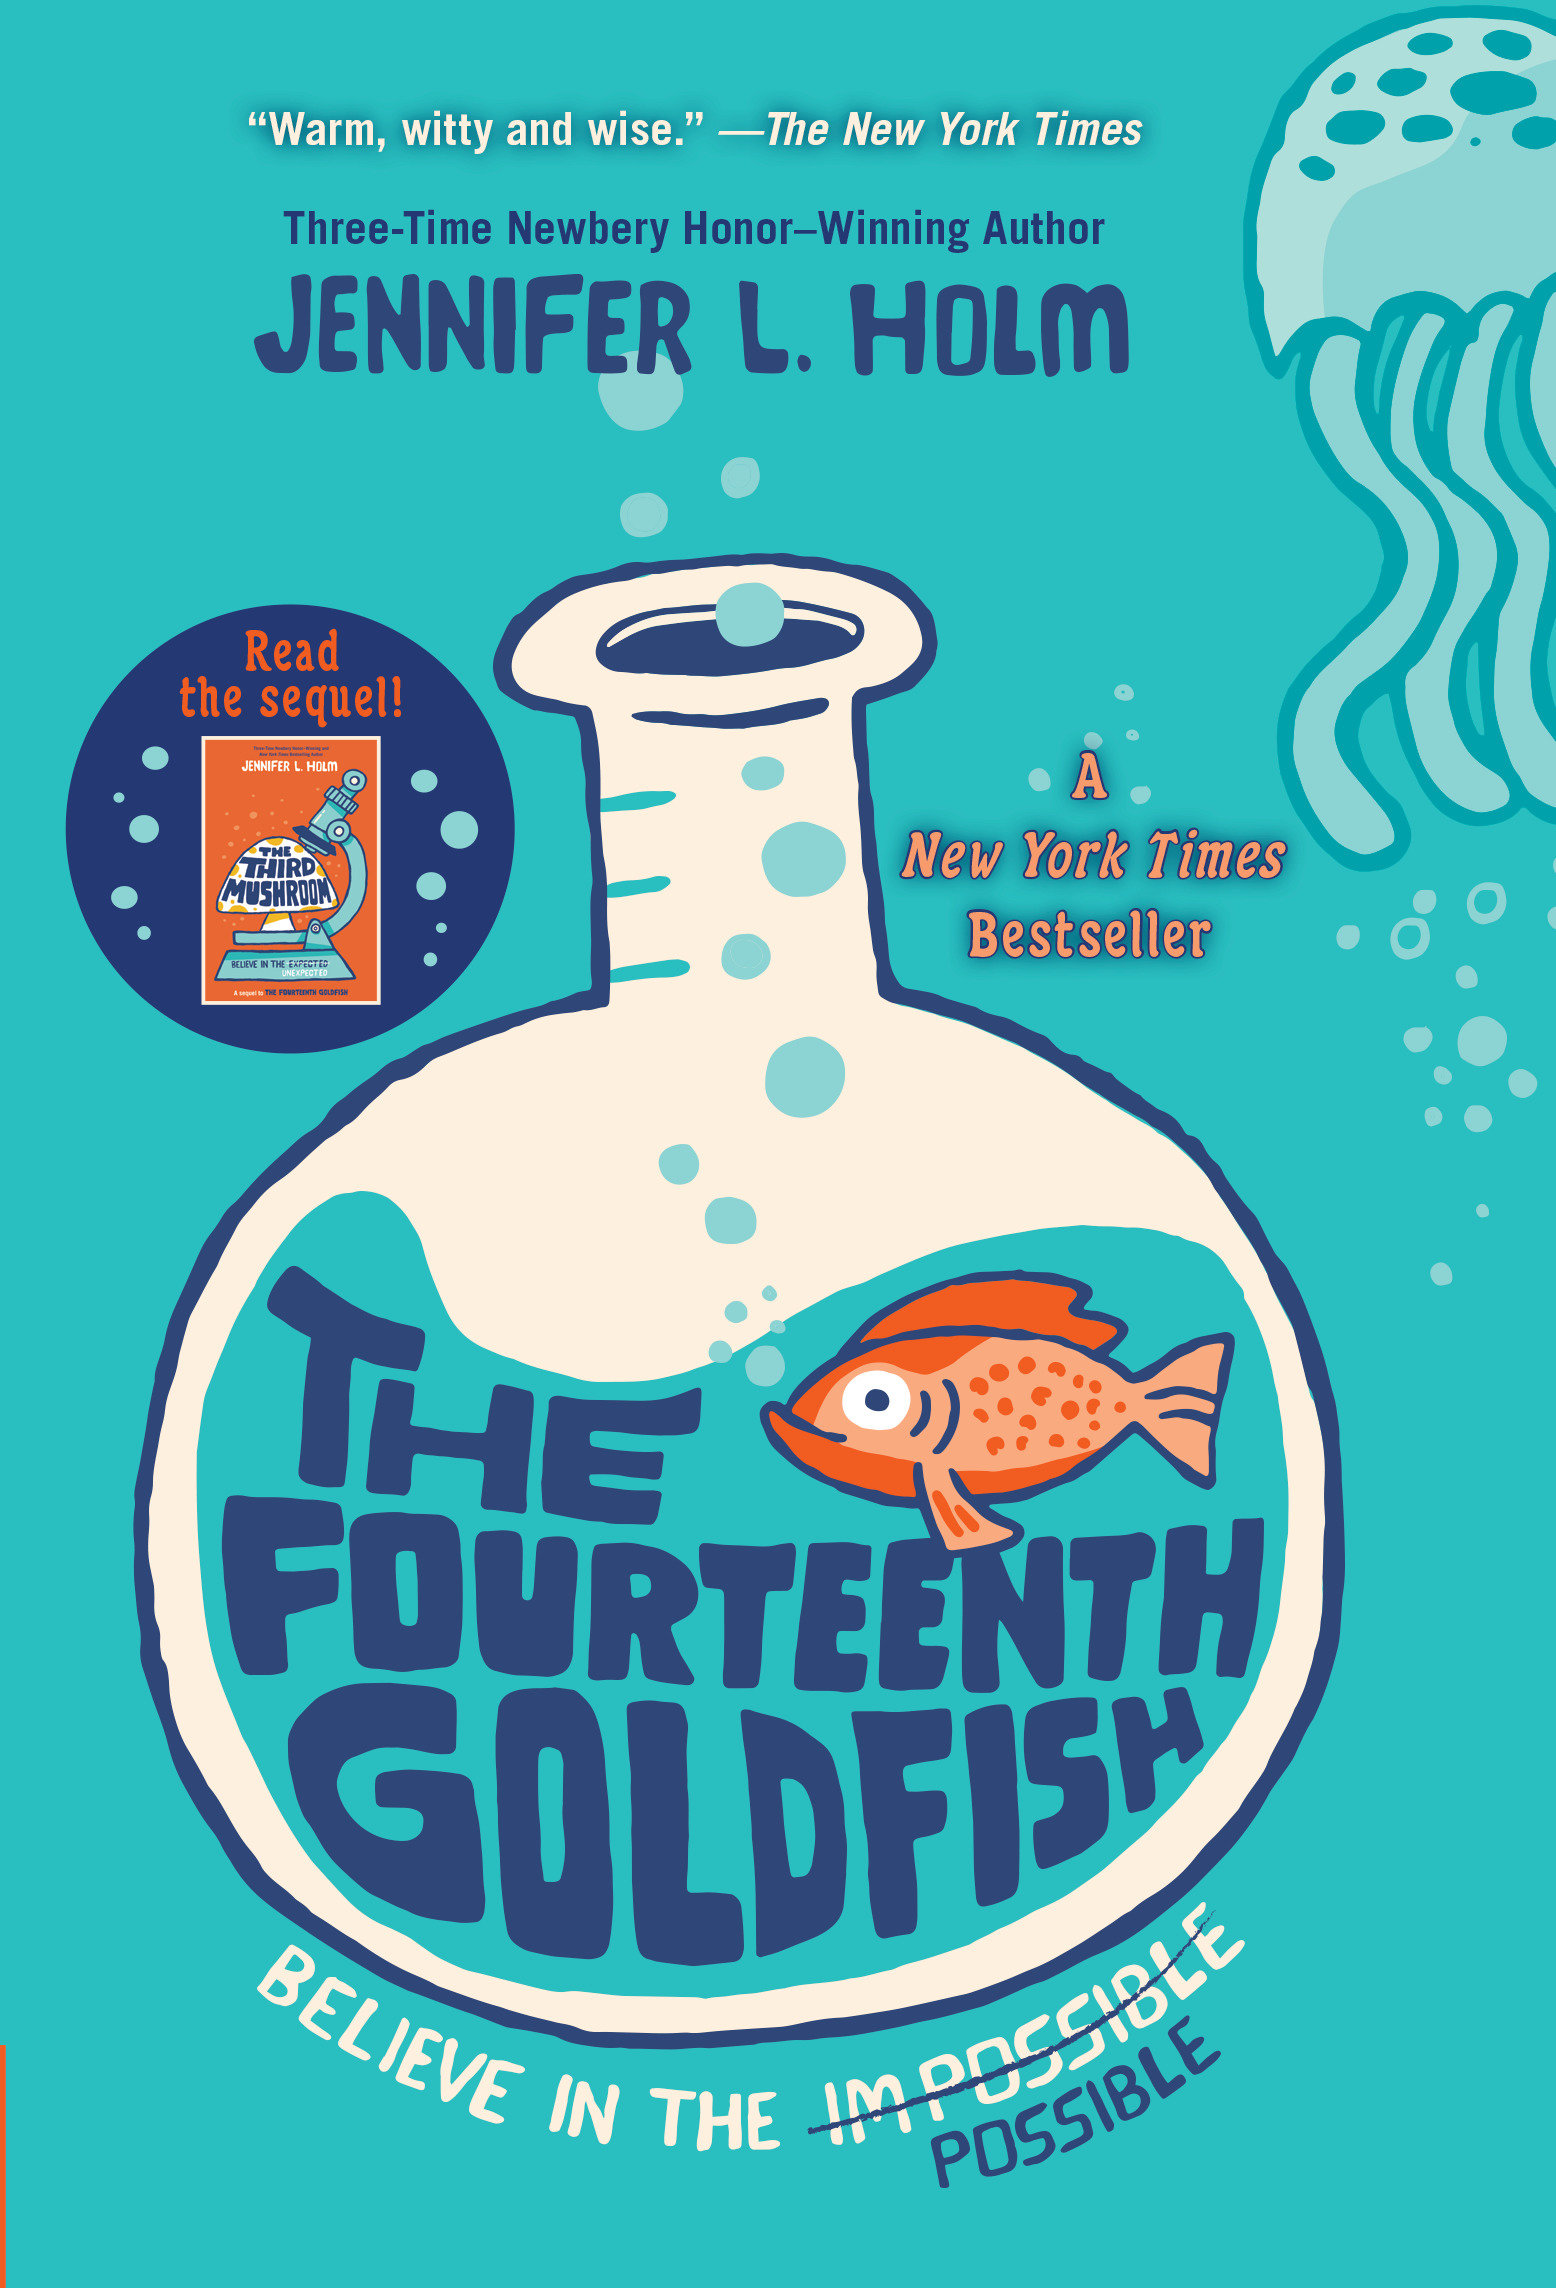 The fourteenth goldfish cover image